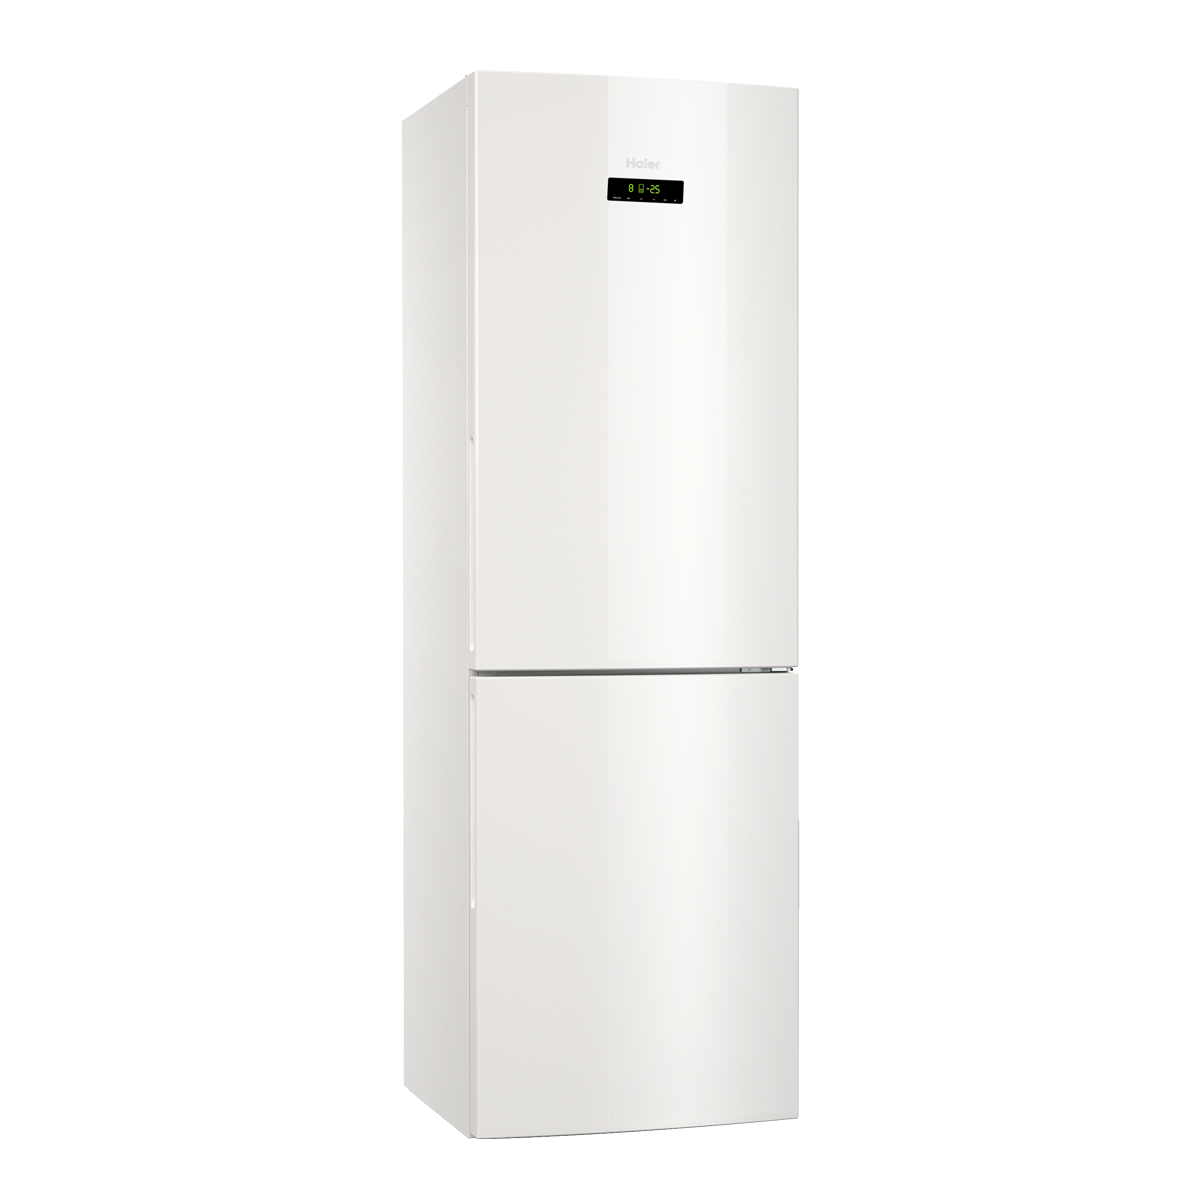 Холодильник Haier cfd633cw. Хайер холодильник - морозильник cfd633cw. Холодильник Хайер 201 см. Холодильник Haier 600. Холодильник черкесск